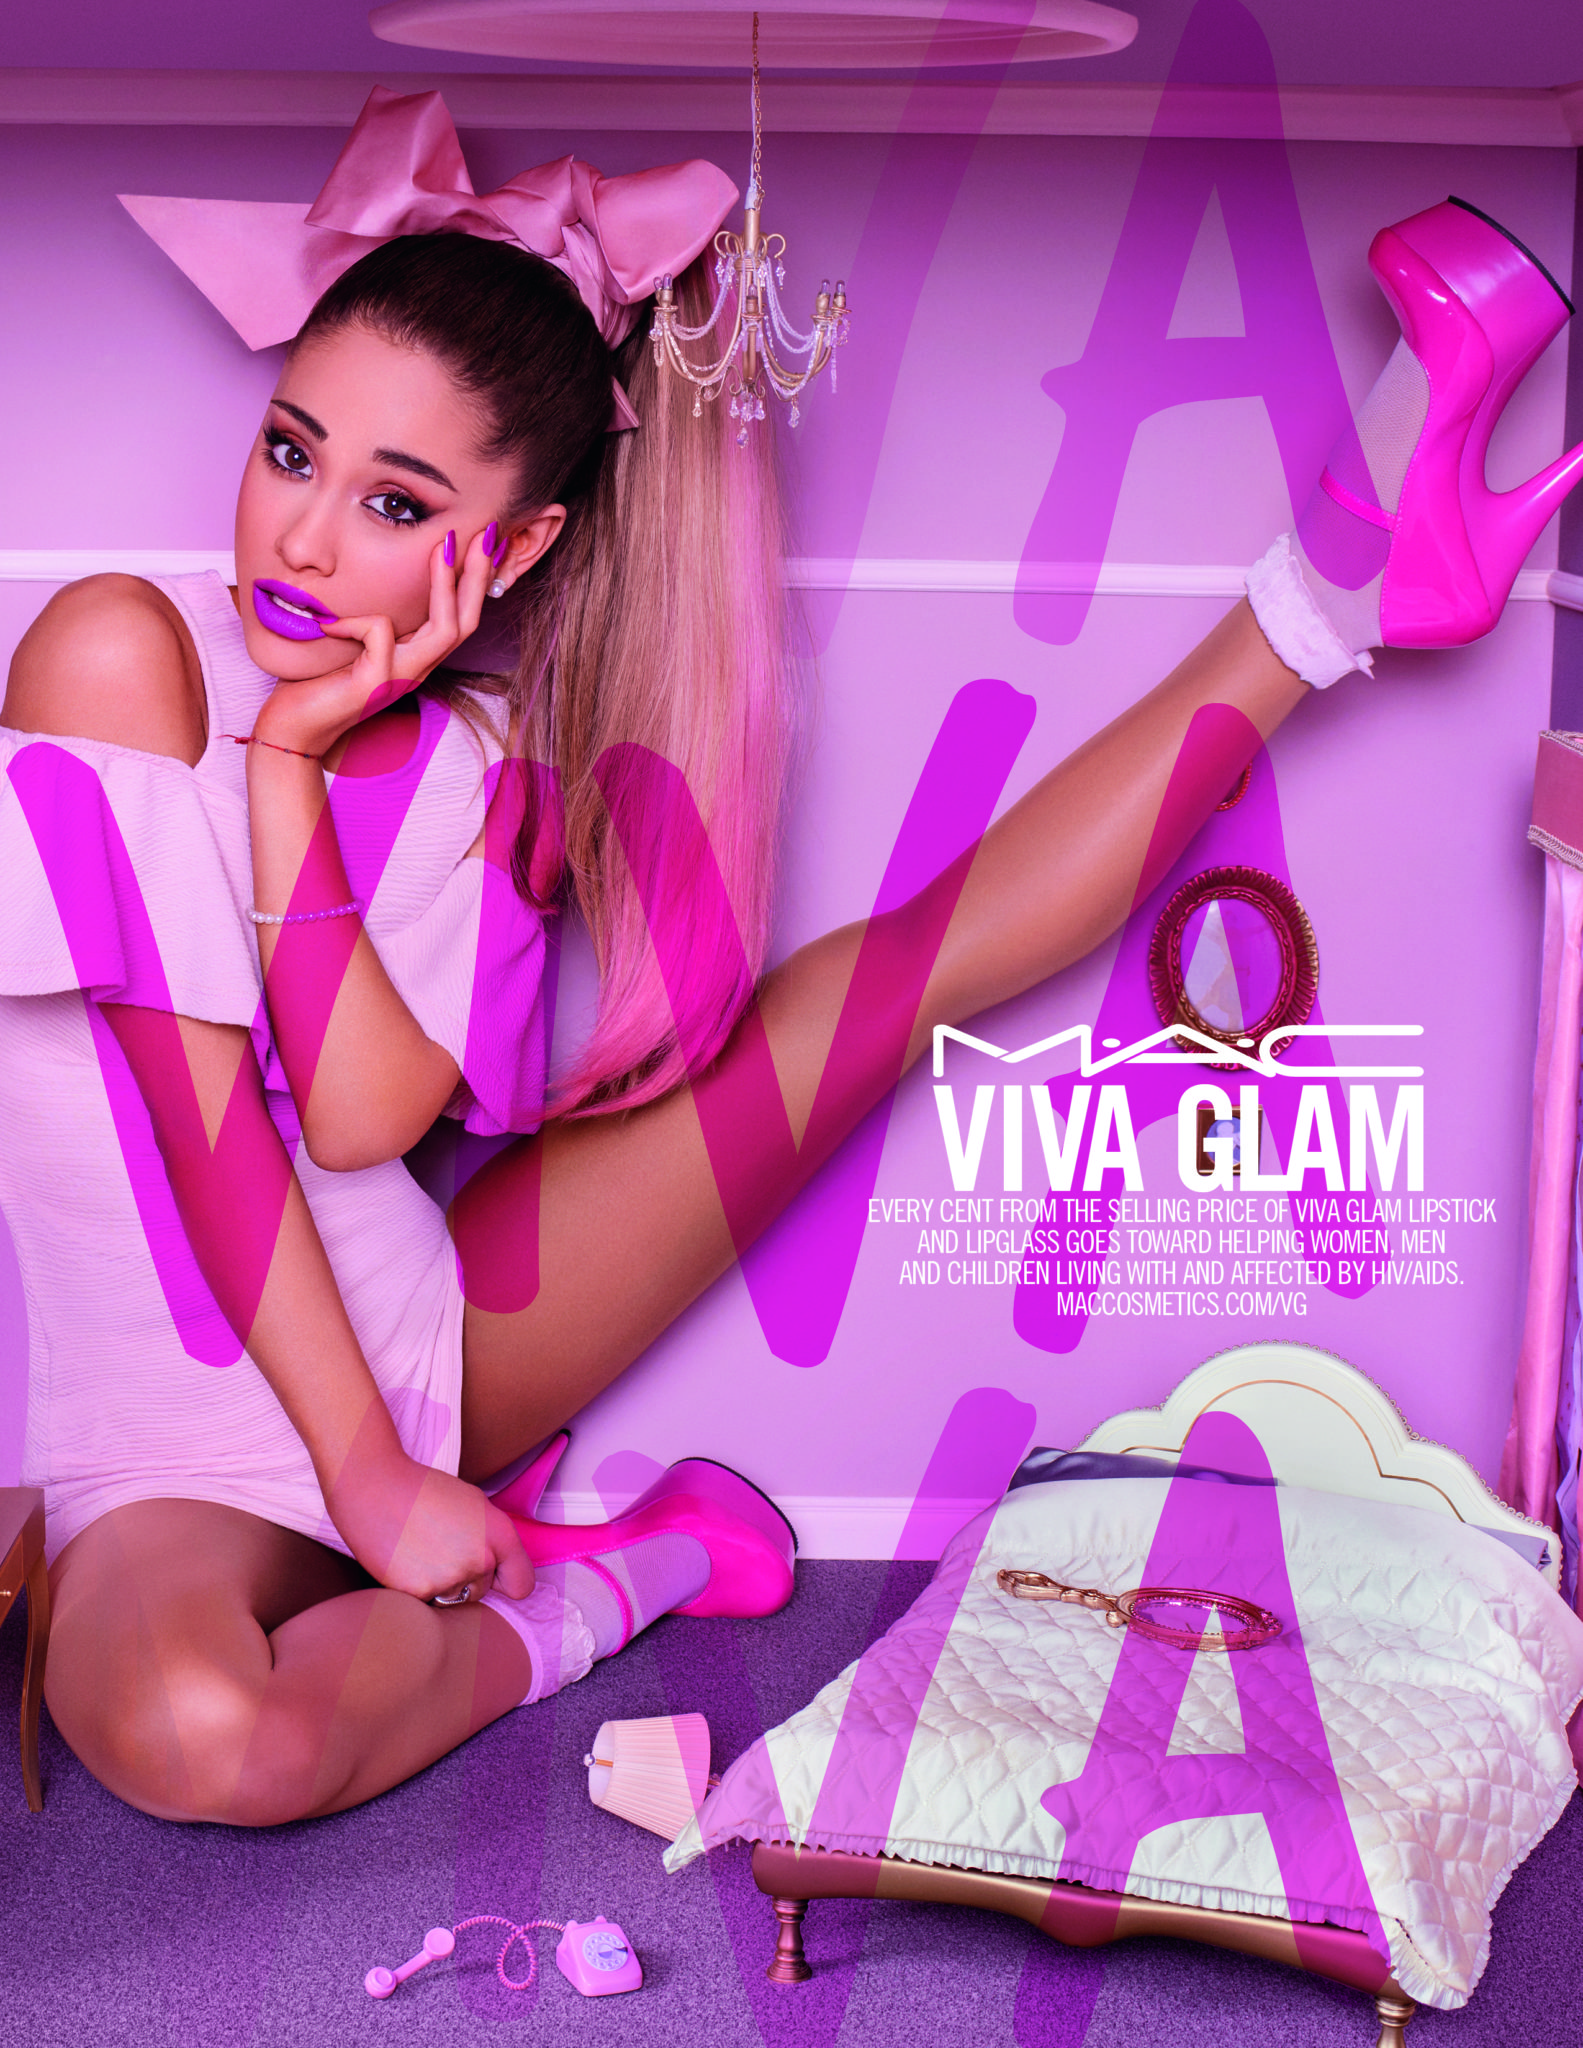 M.A.C Presents: #VIVAGLAM Ariana Grande 2